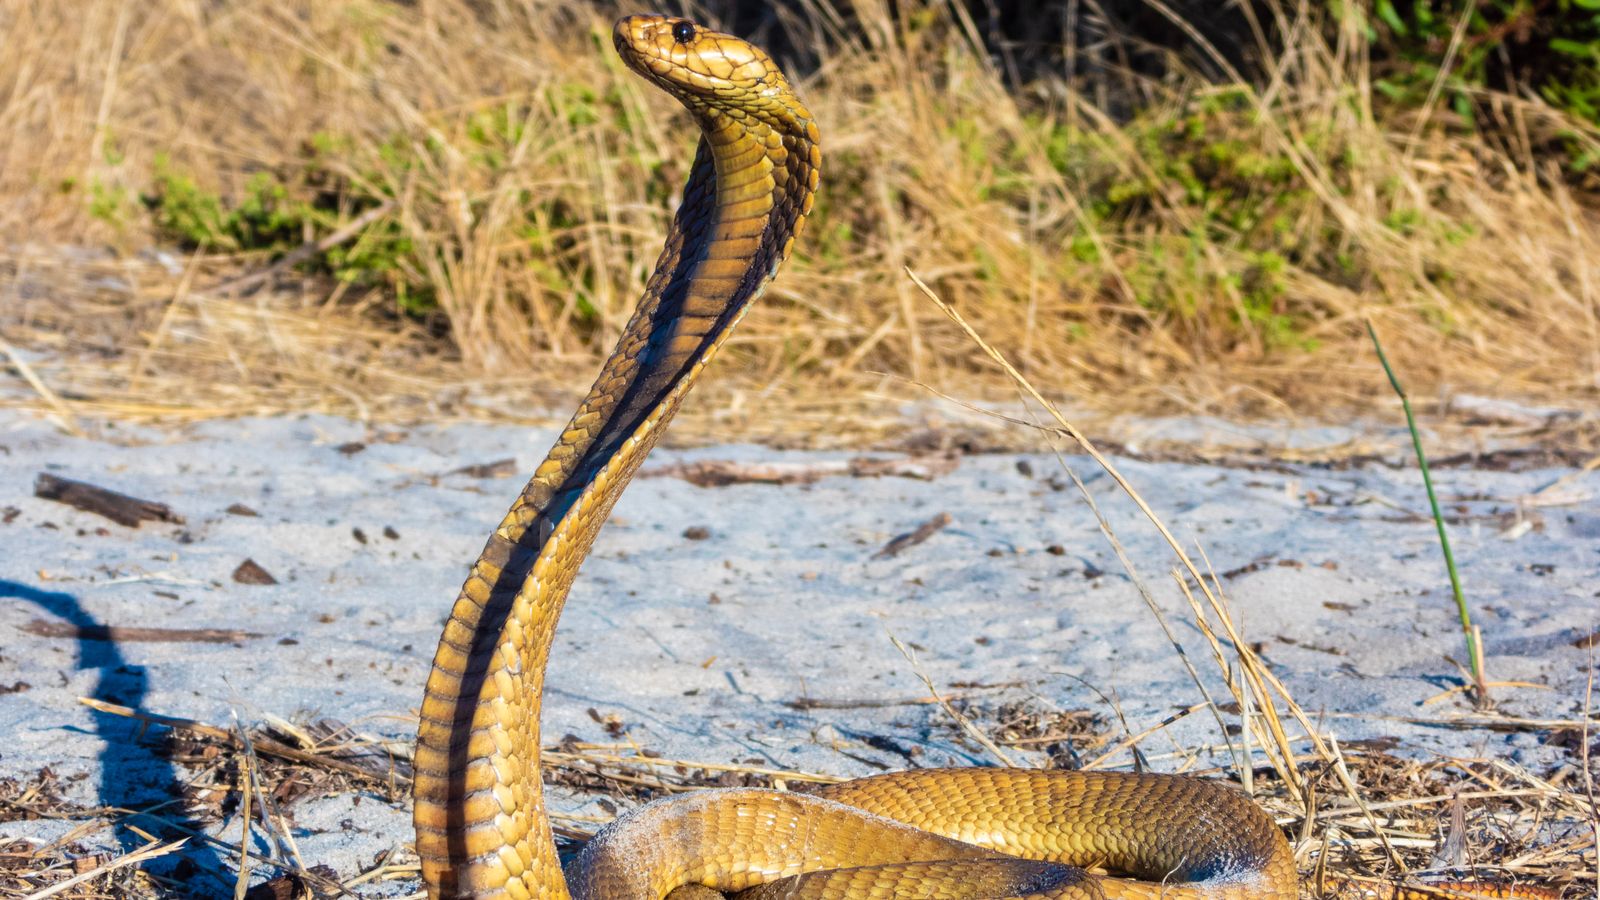 Snake on a plane: Highly venomous cobra found under pilot's seat